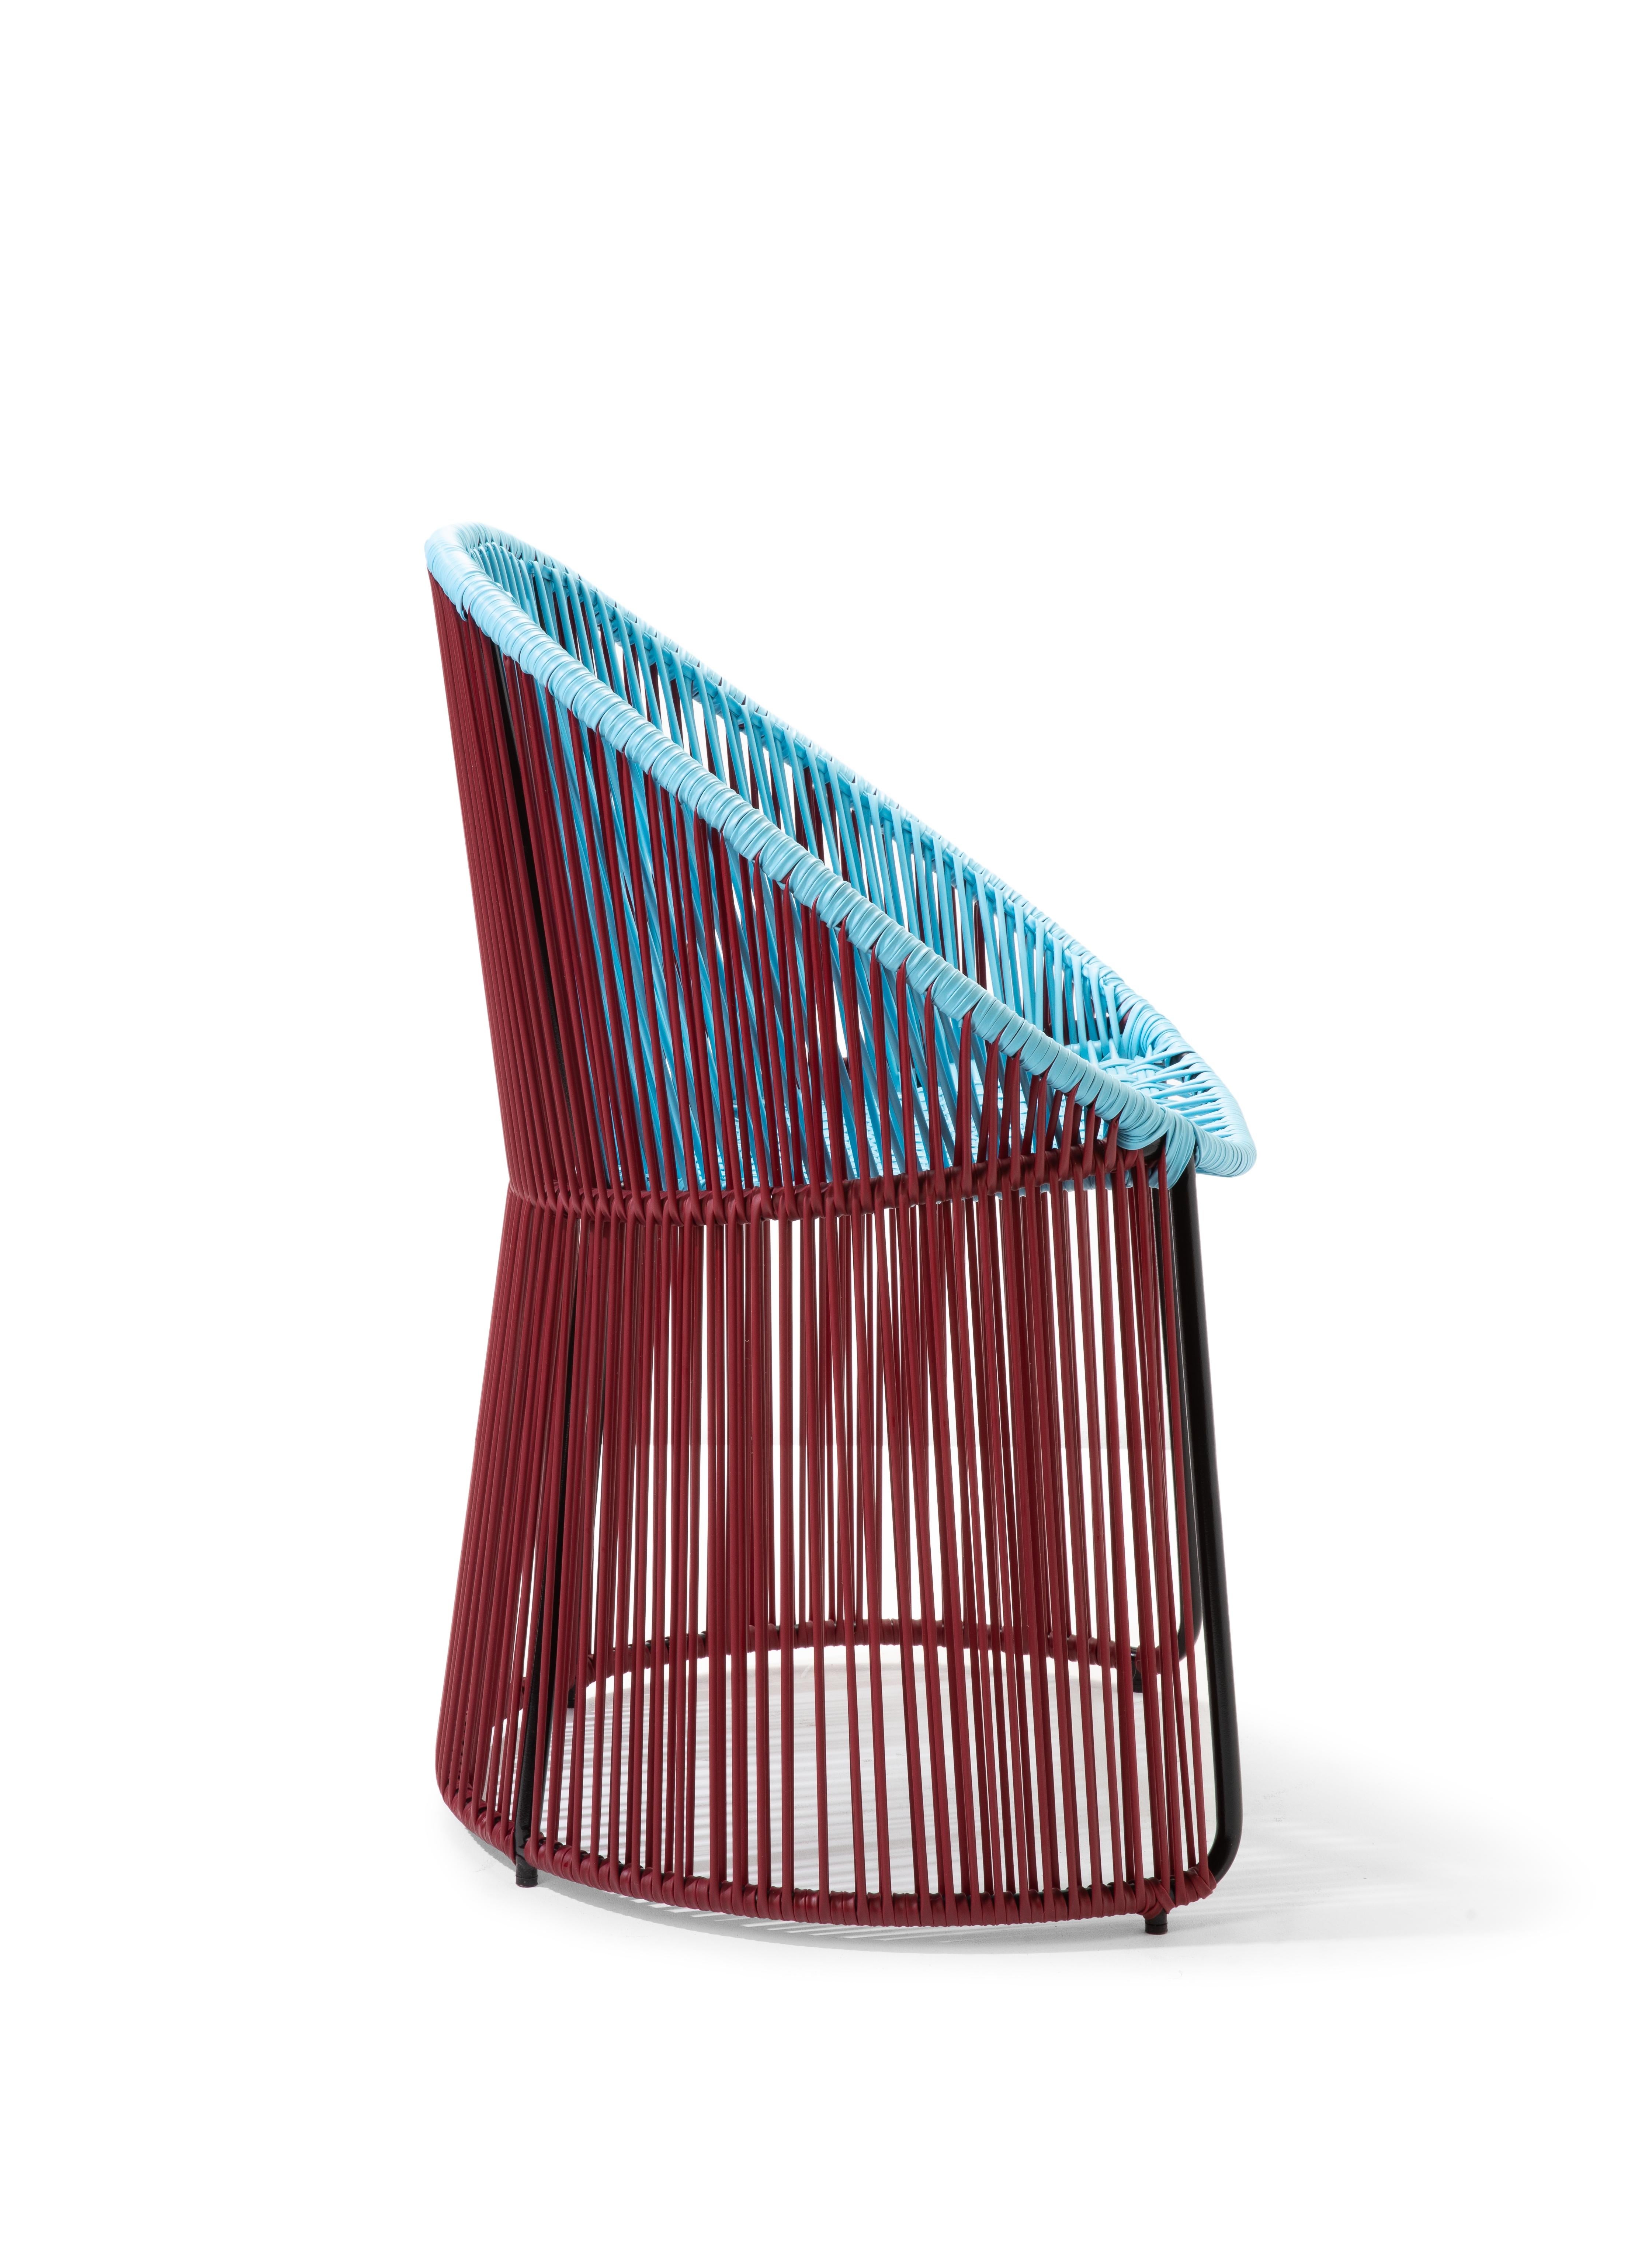 German Set of 4 Blue Cartagenas Dining Chair by Sebastian Herkner